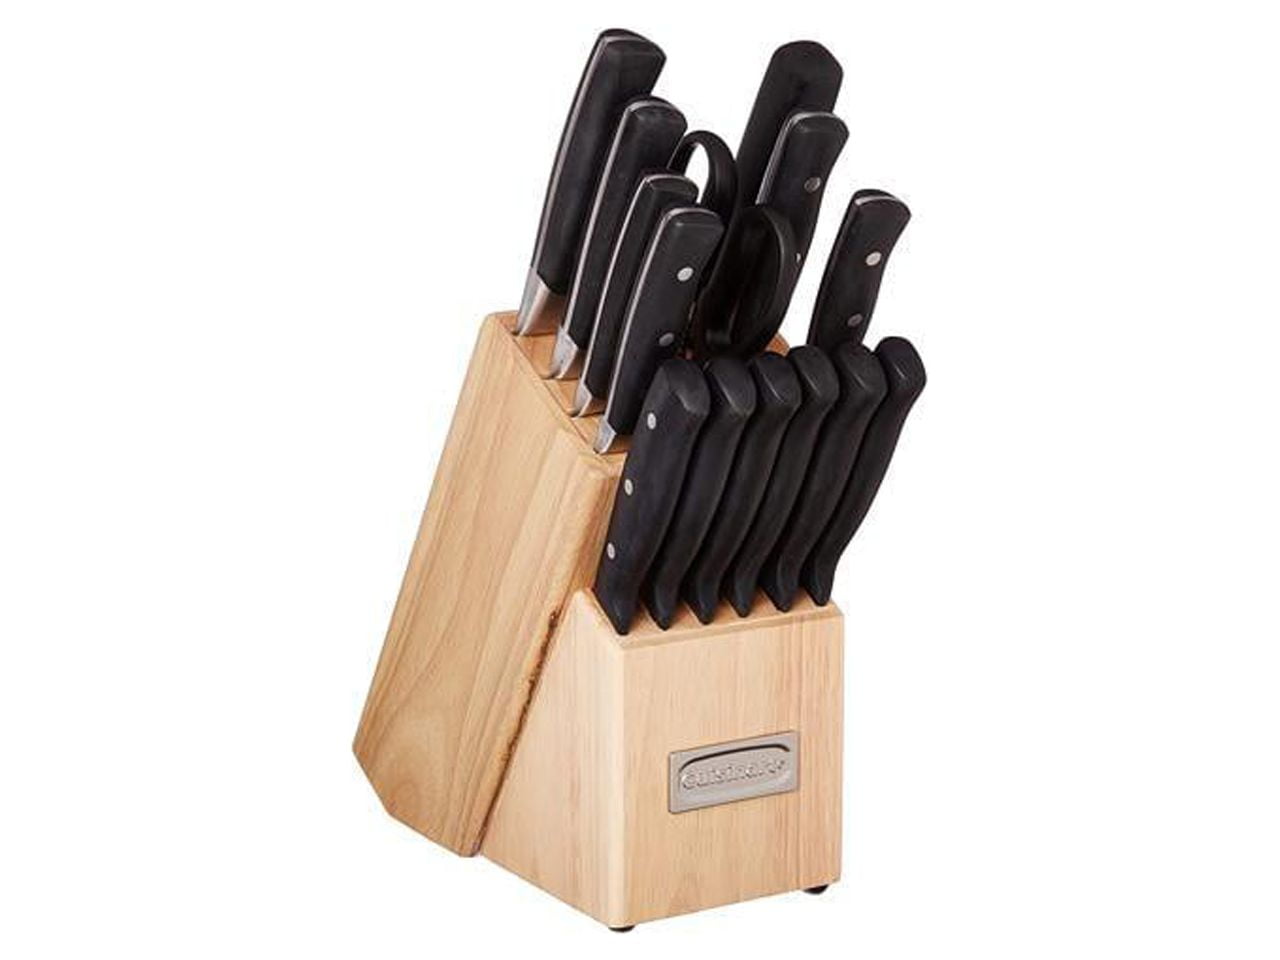 Cuisinart 15-Piece Triple Rivet Knife Block Set